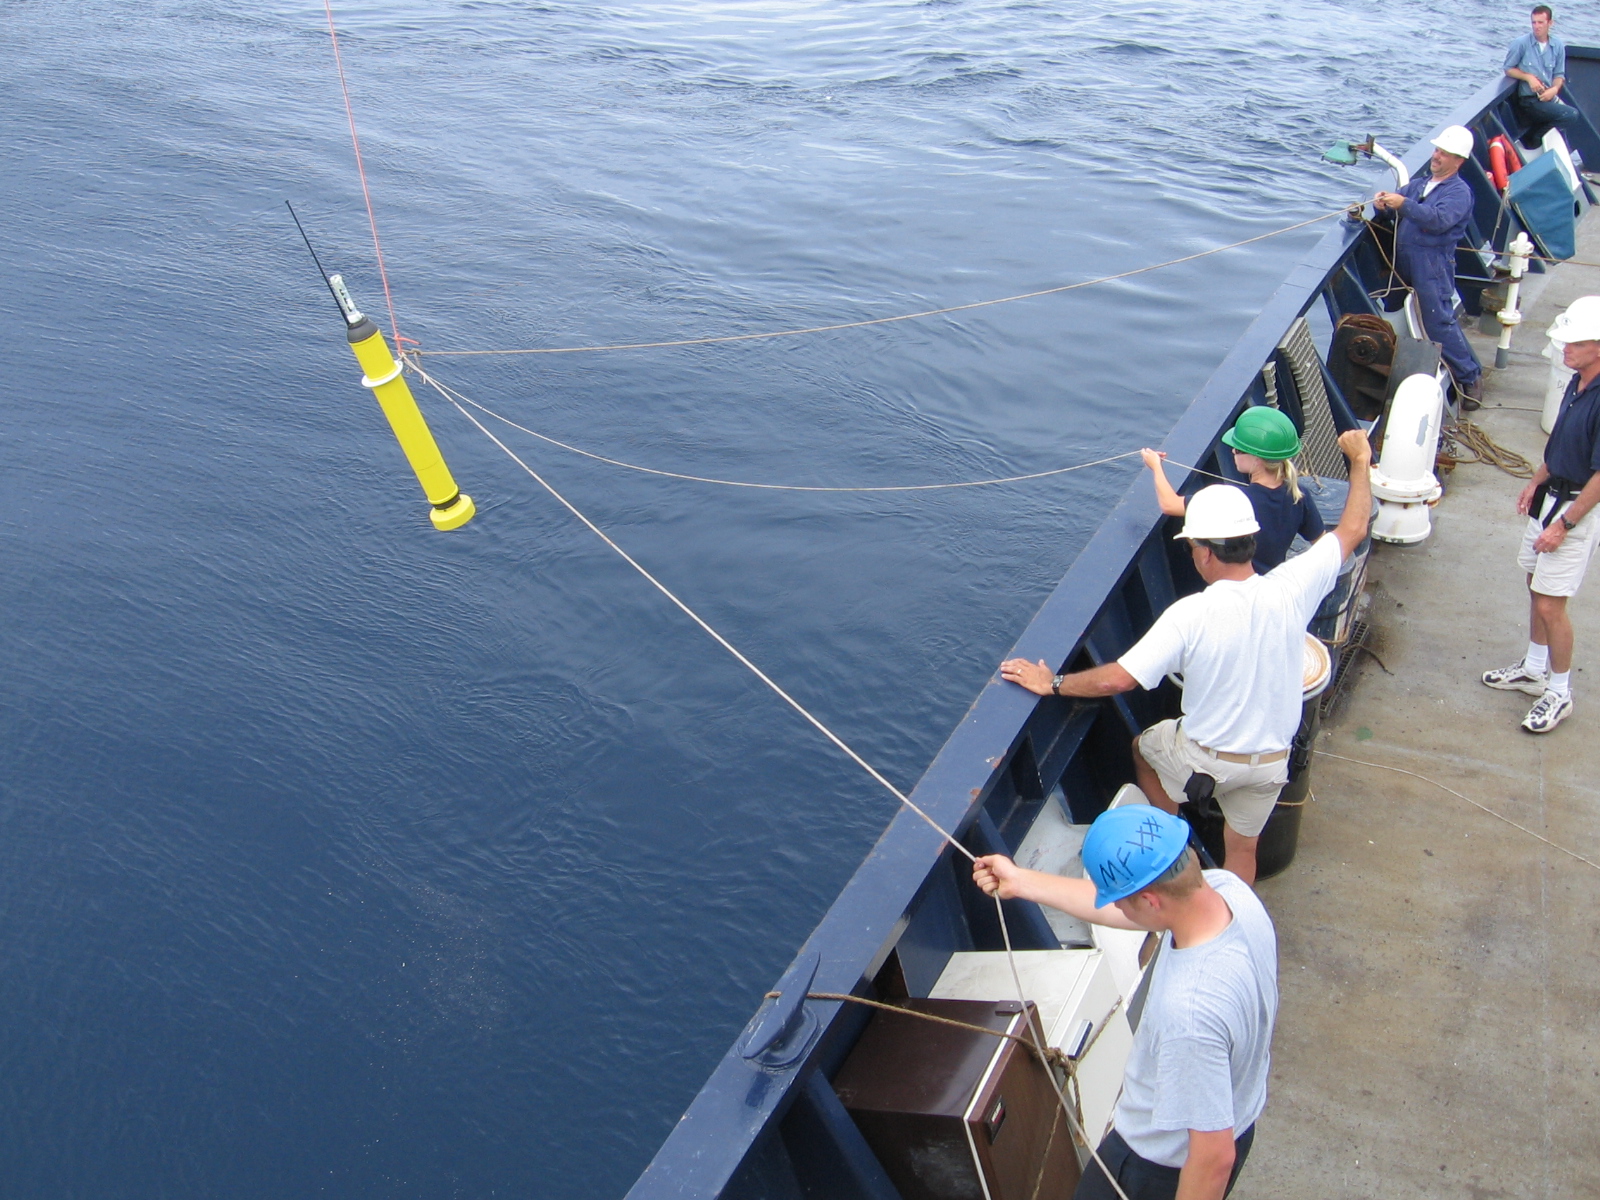 Argo Floats from the TS Golden Bear: Deployment and Data